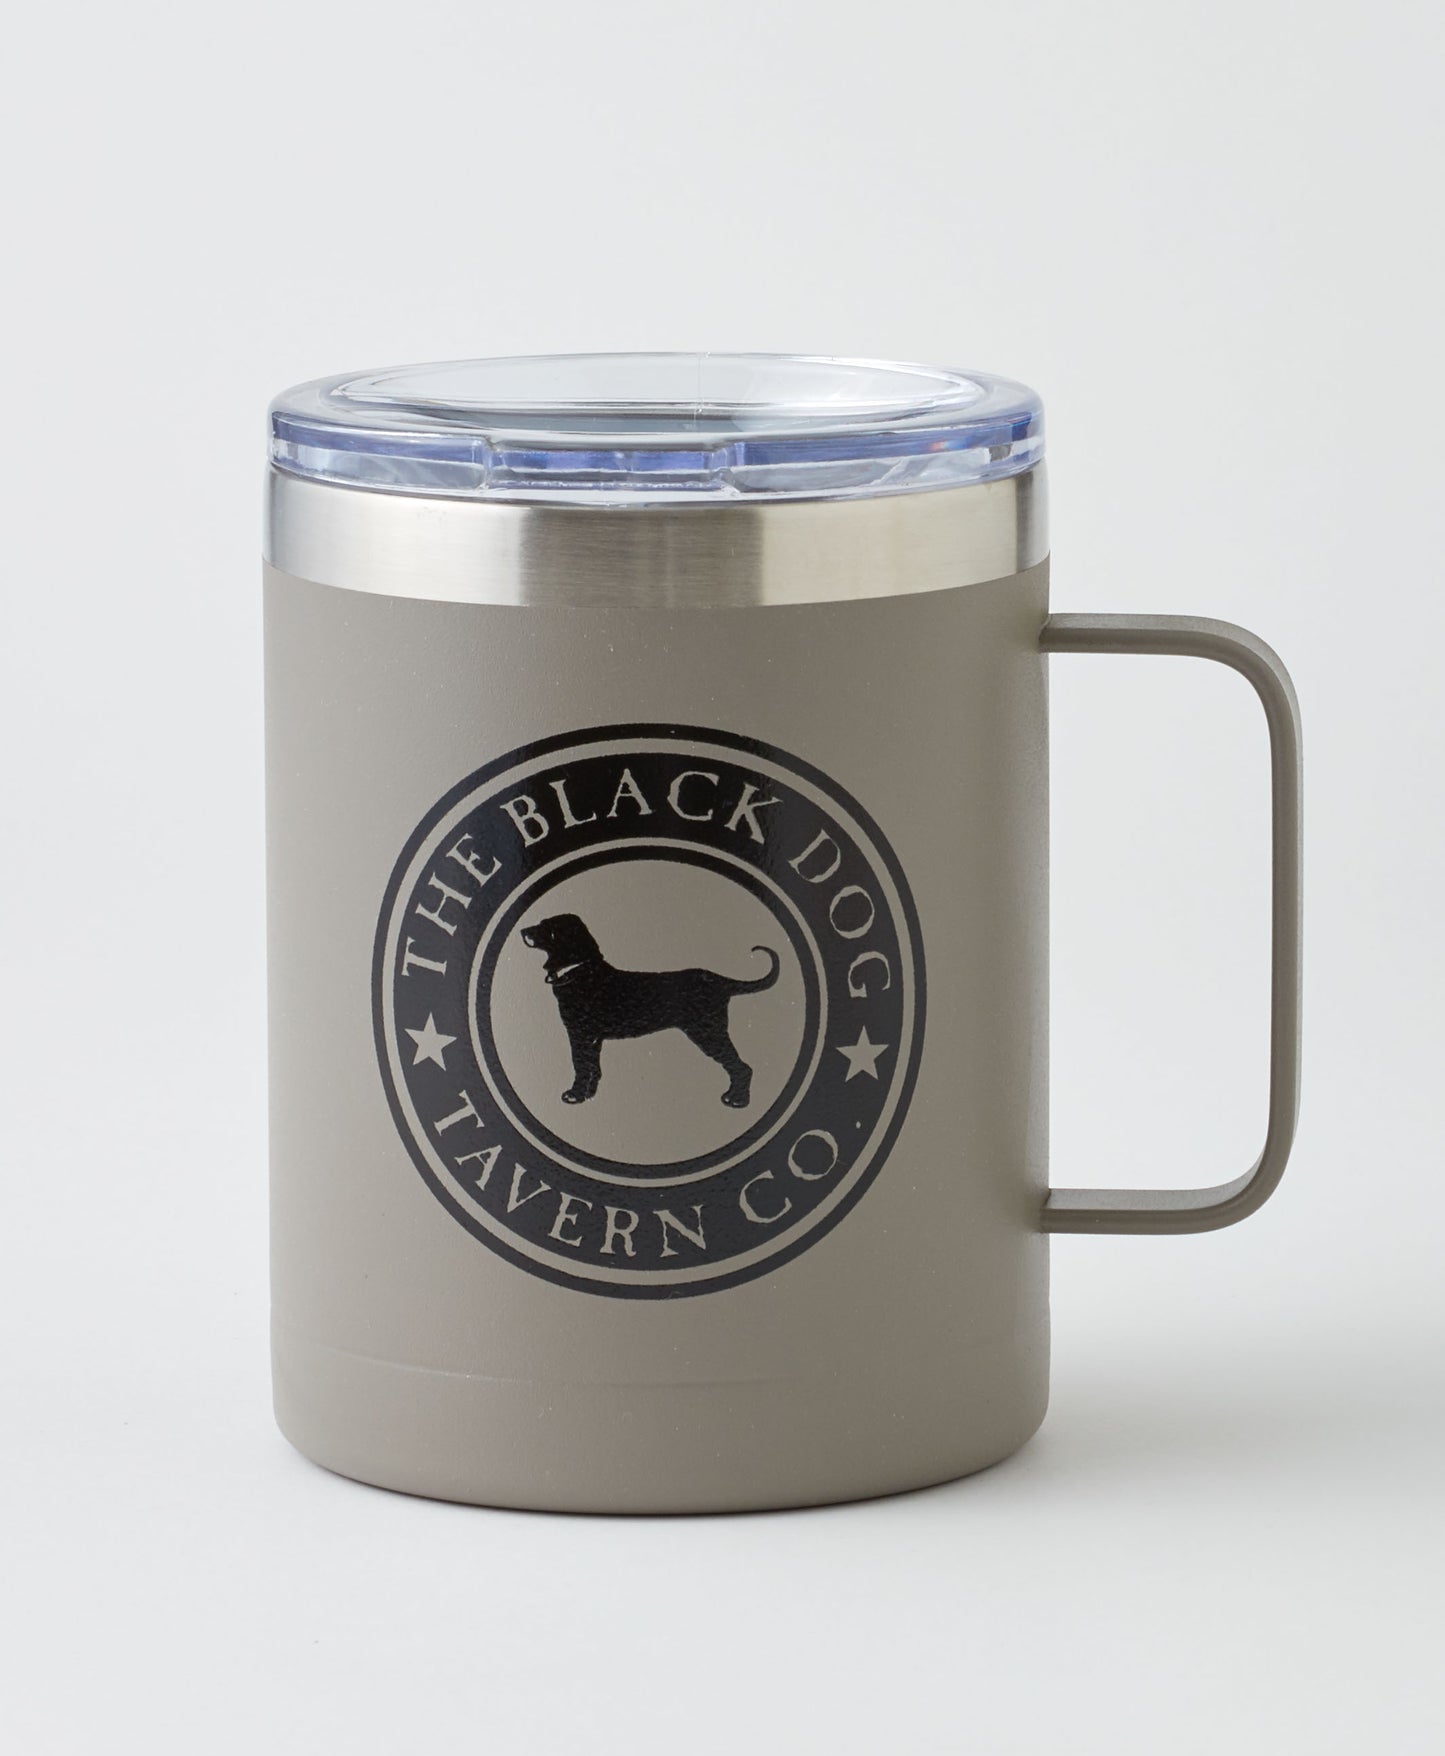 Best Dog Dad Ever Coffee Travel Mug 20oz Stainless Steel Vacuum Insula –  BackyardPeaks